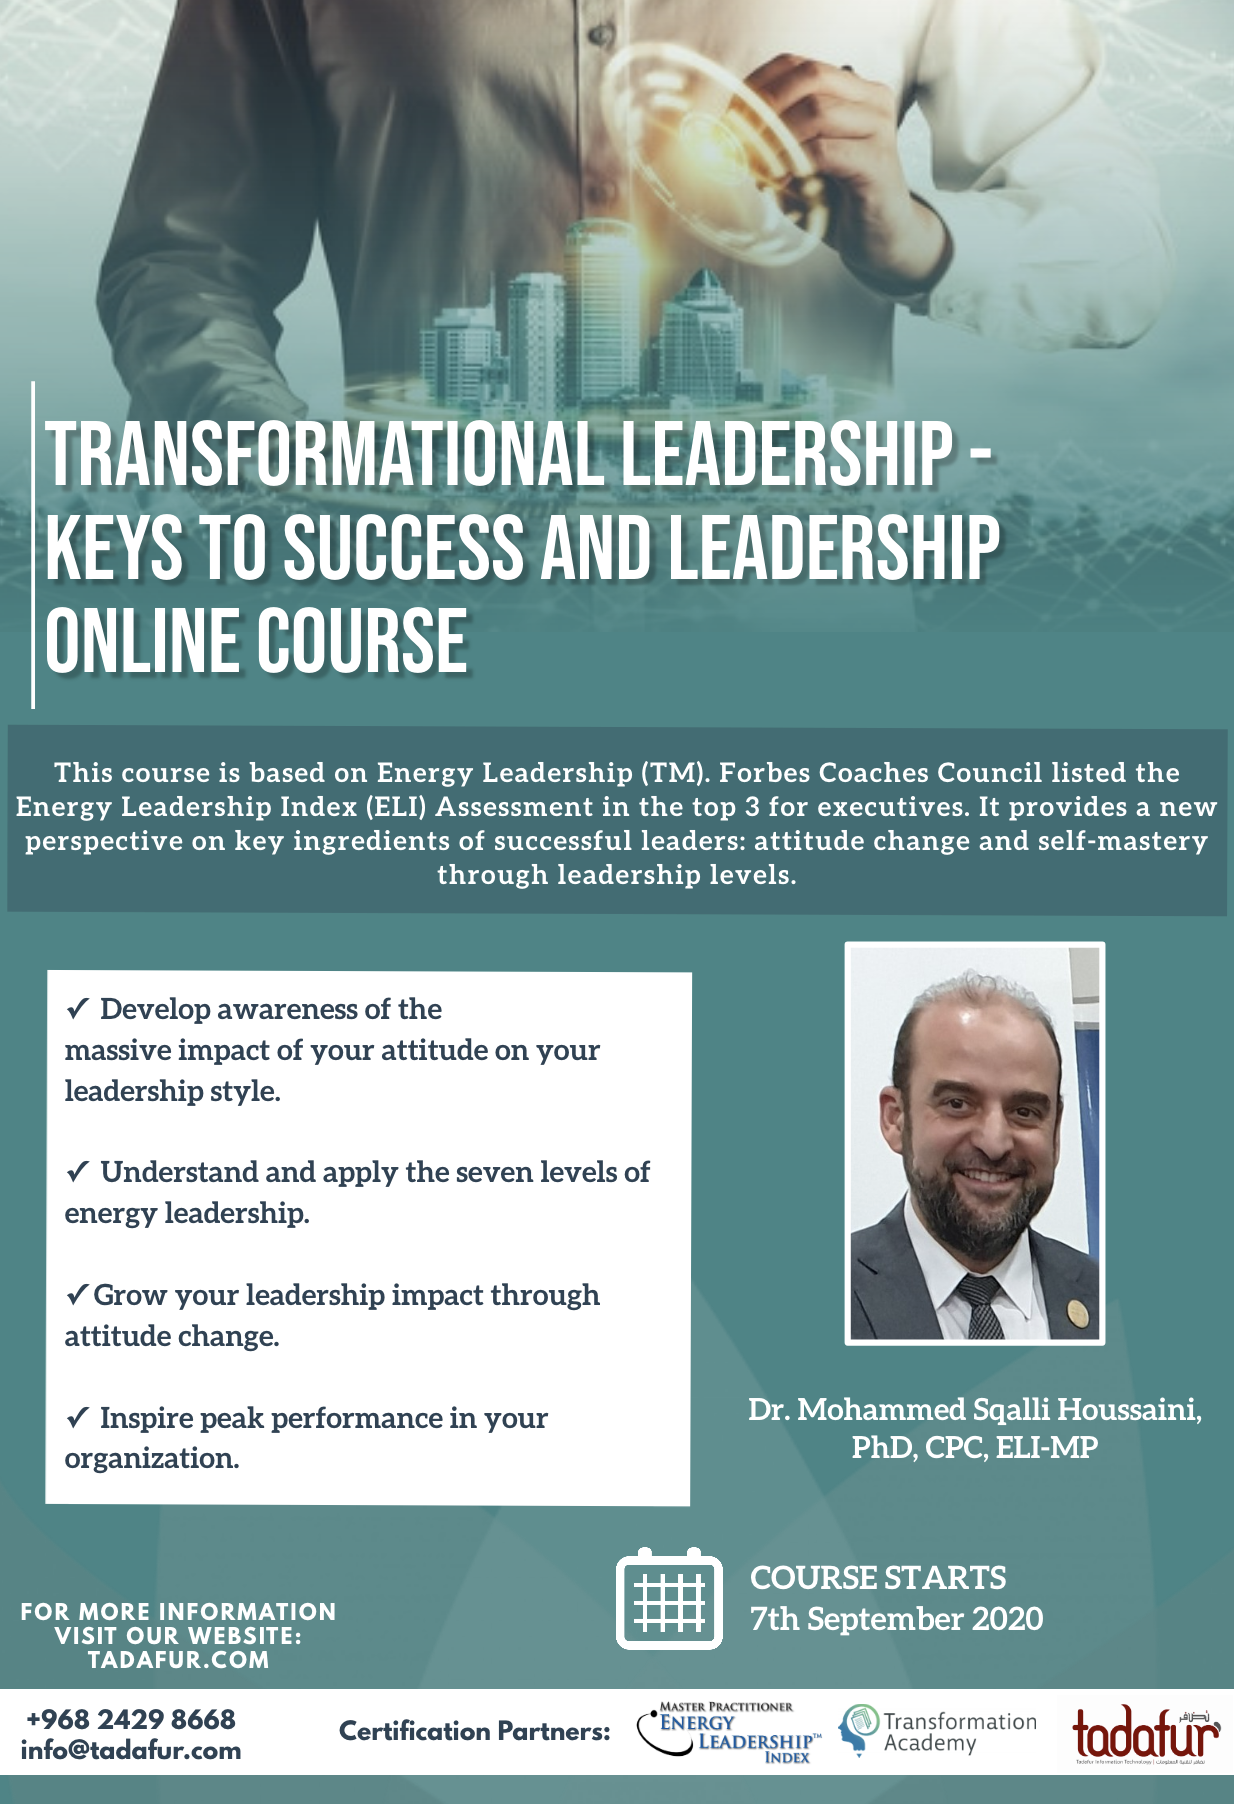 Transformational Leadership online courses - Tadafur